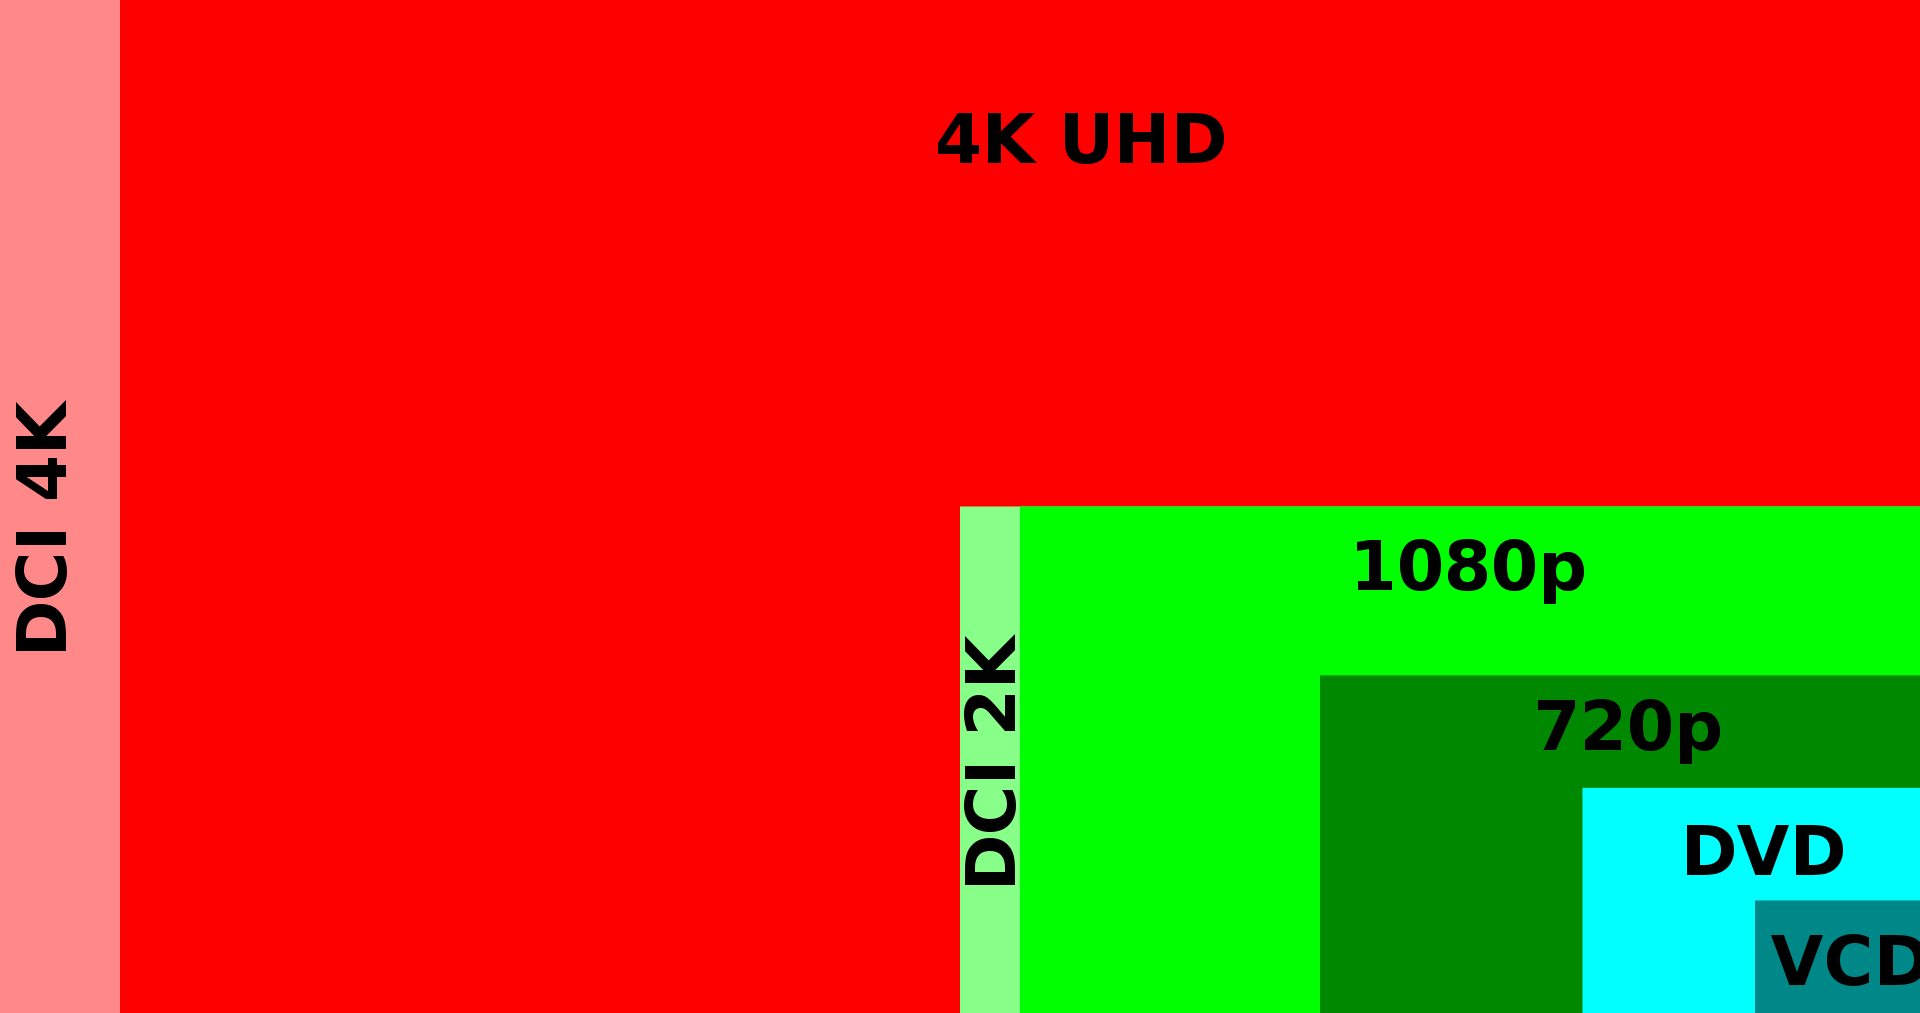 Blu-ray vs 4K: An In-depth Analysis